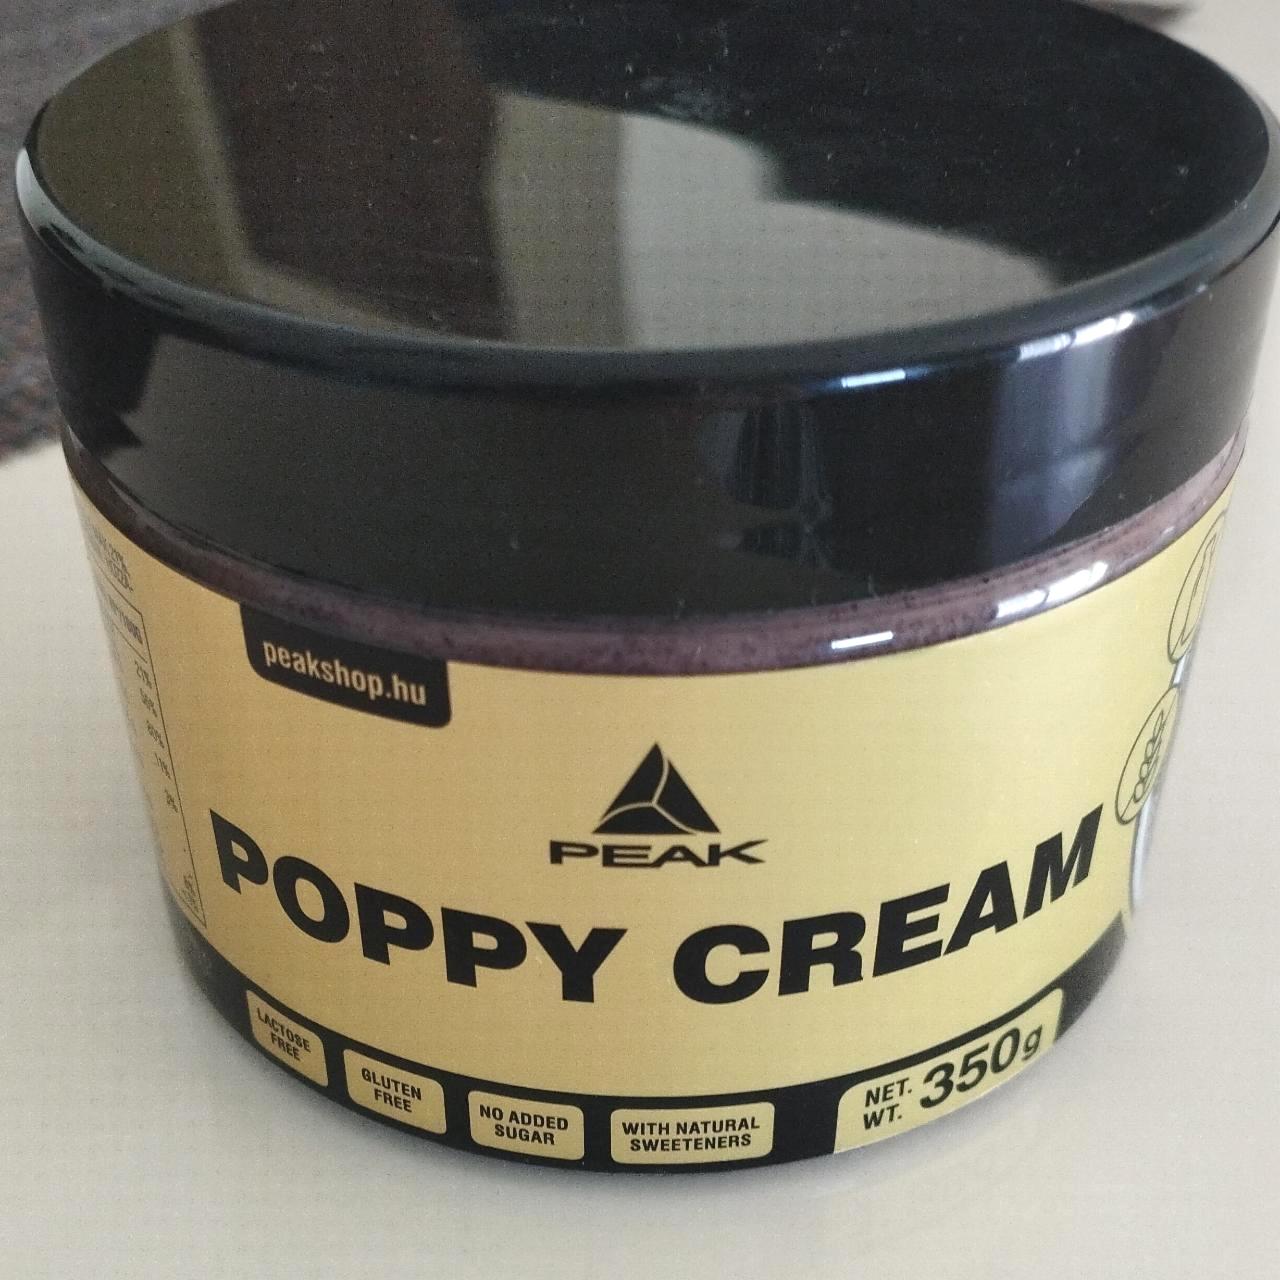 Képek - Poppy cream mákkrém Peak